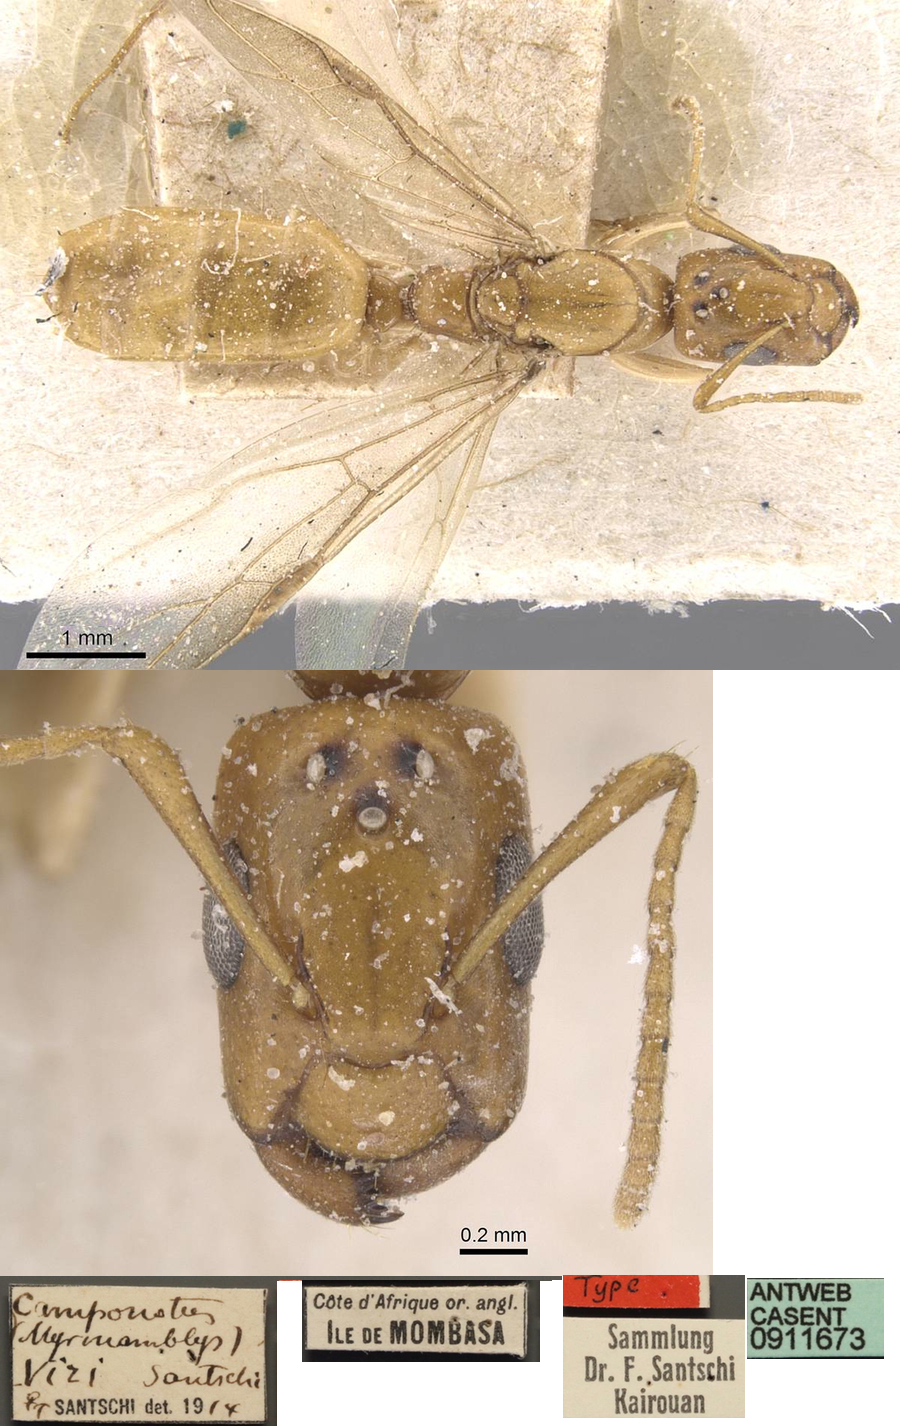 Camponotus viri queen